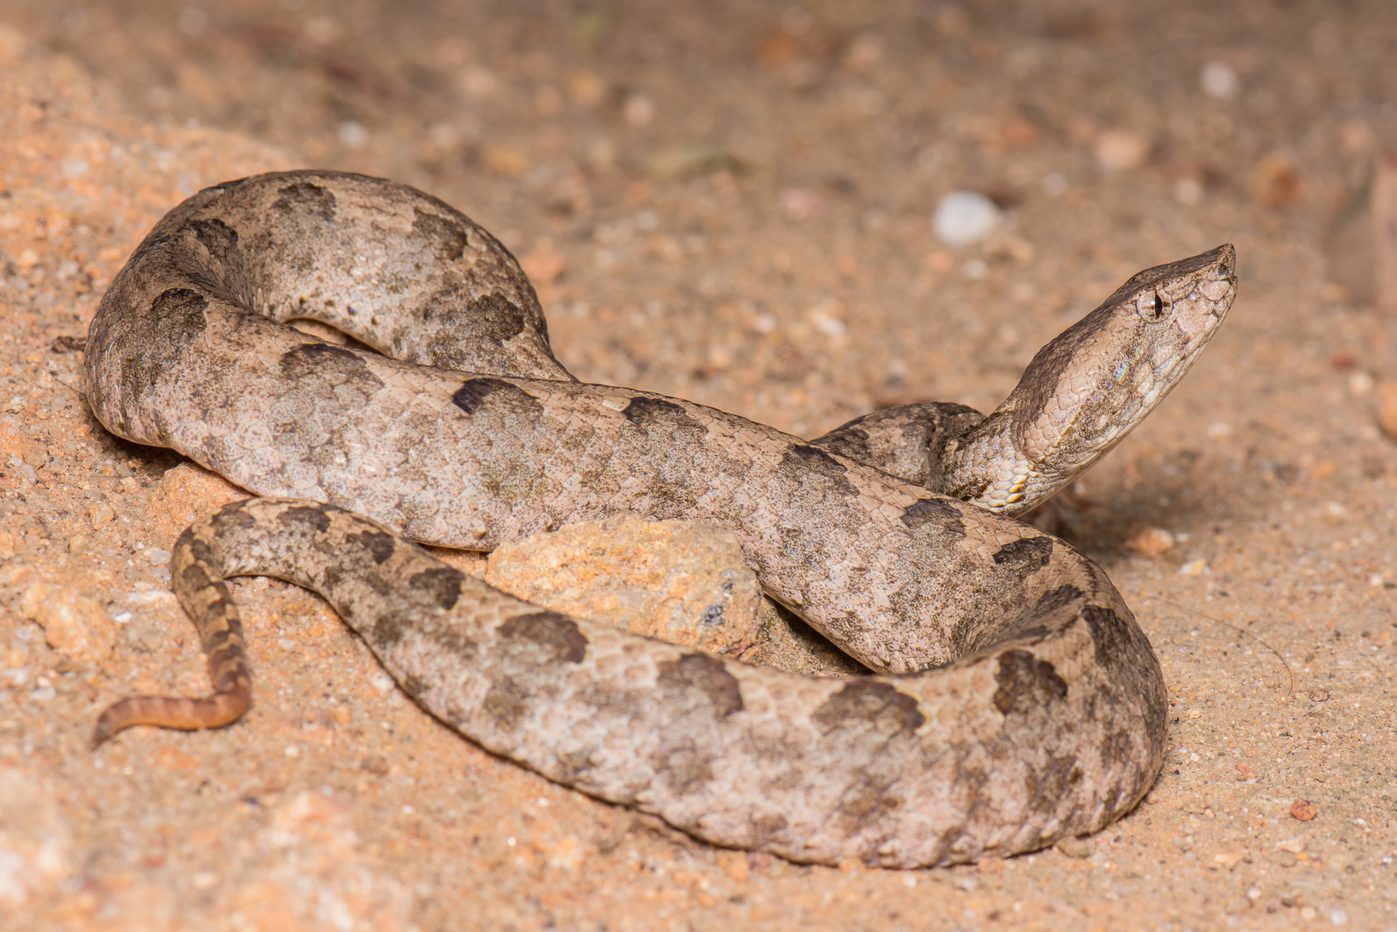 A Hypnale zara snake in its resting position.